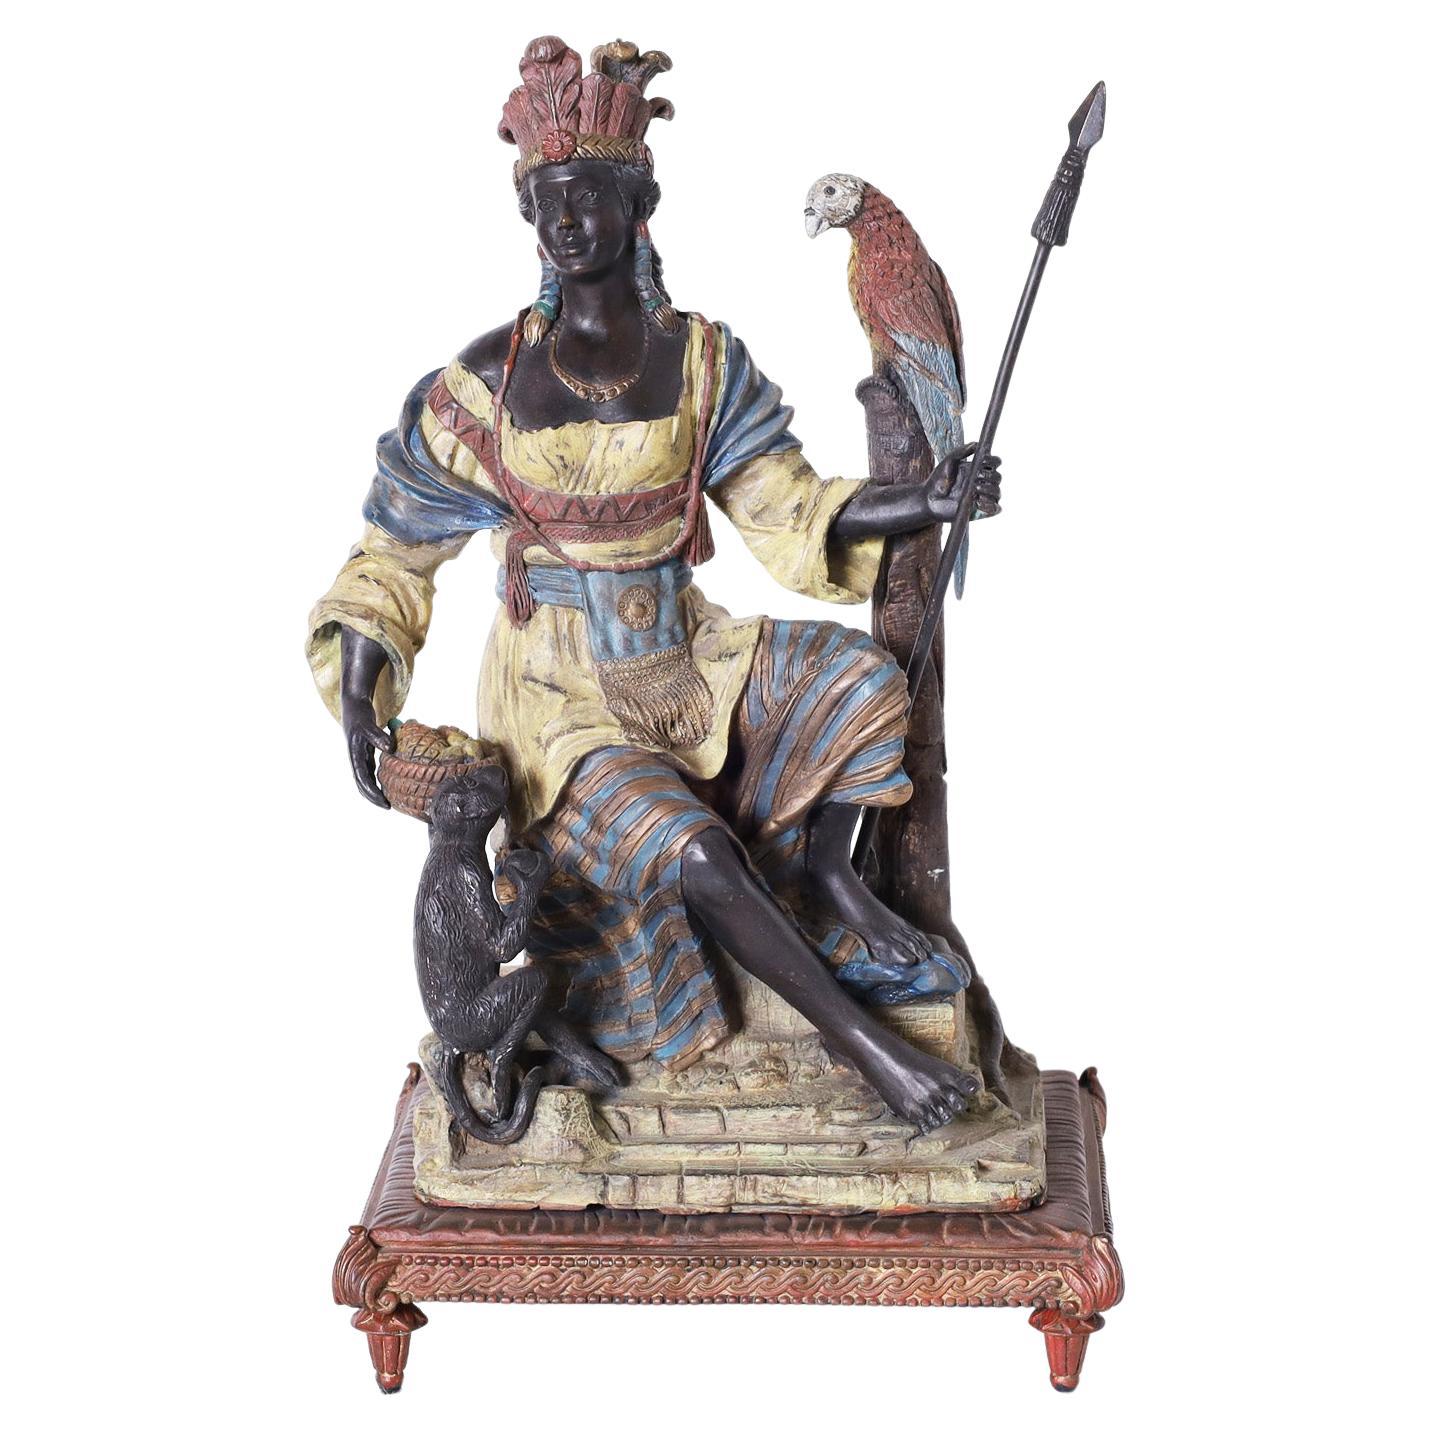 Figurine orientaliste figurative en bronze peint à froid en vente